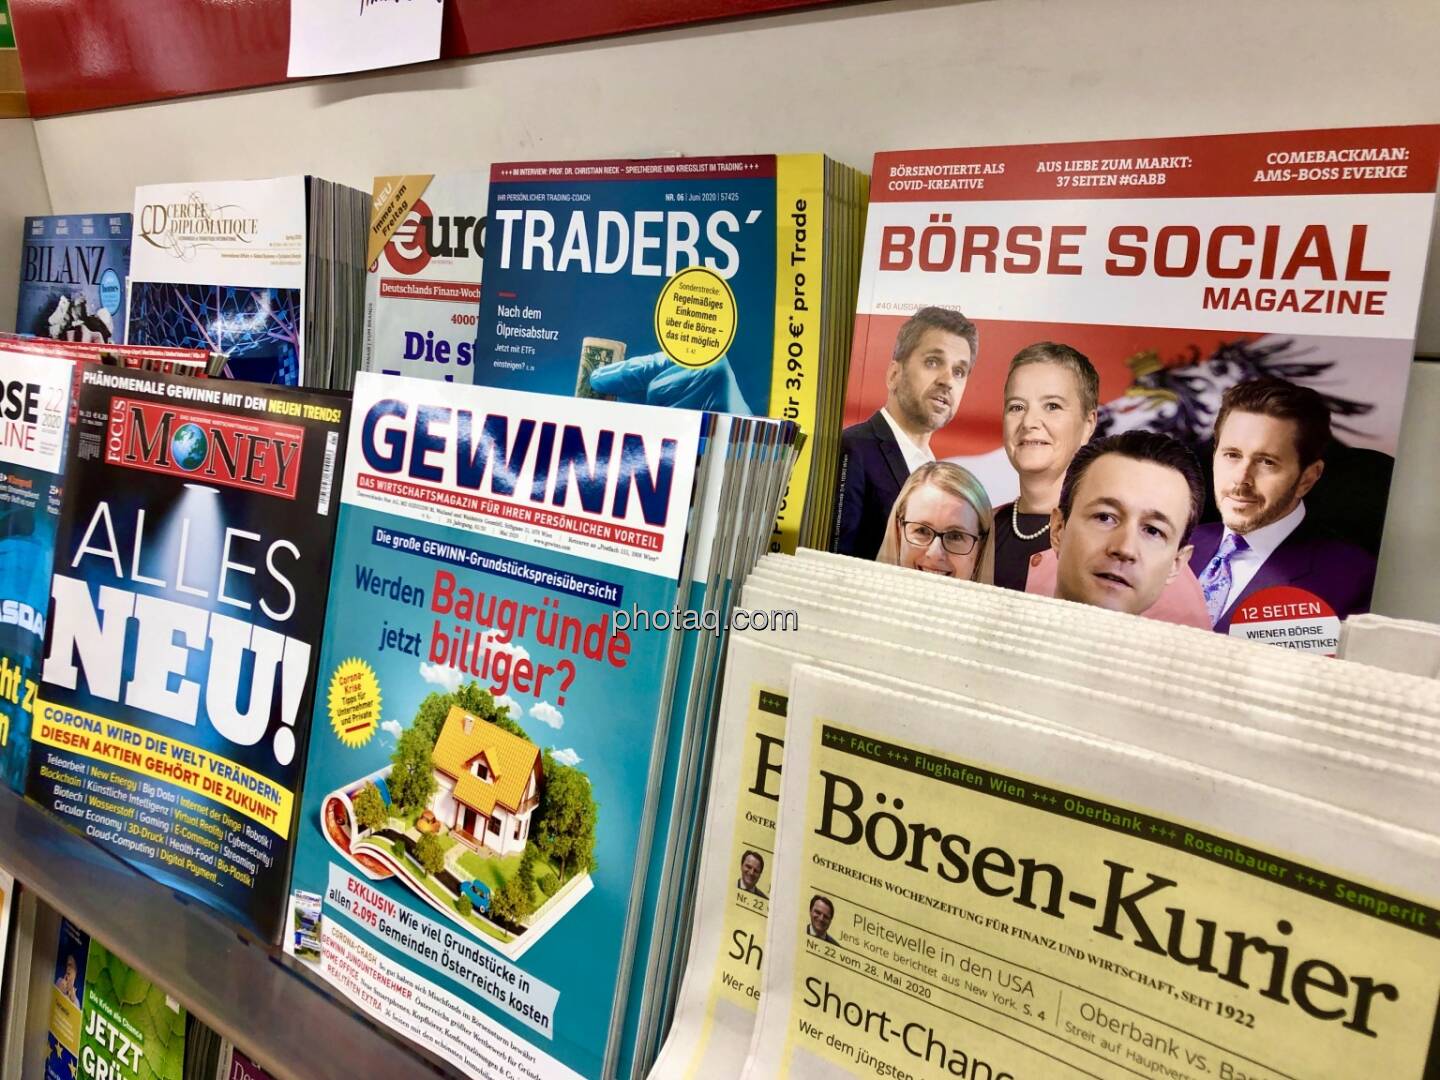 Börse Social Magazine #40, Kiosk, Morawa, Blümel, Sommer-Hemetsberger, Mahrer, Altrichter / Schramböck 
http://boerse-social.com/magazine